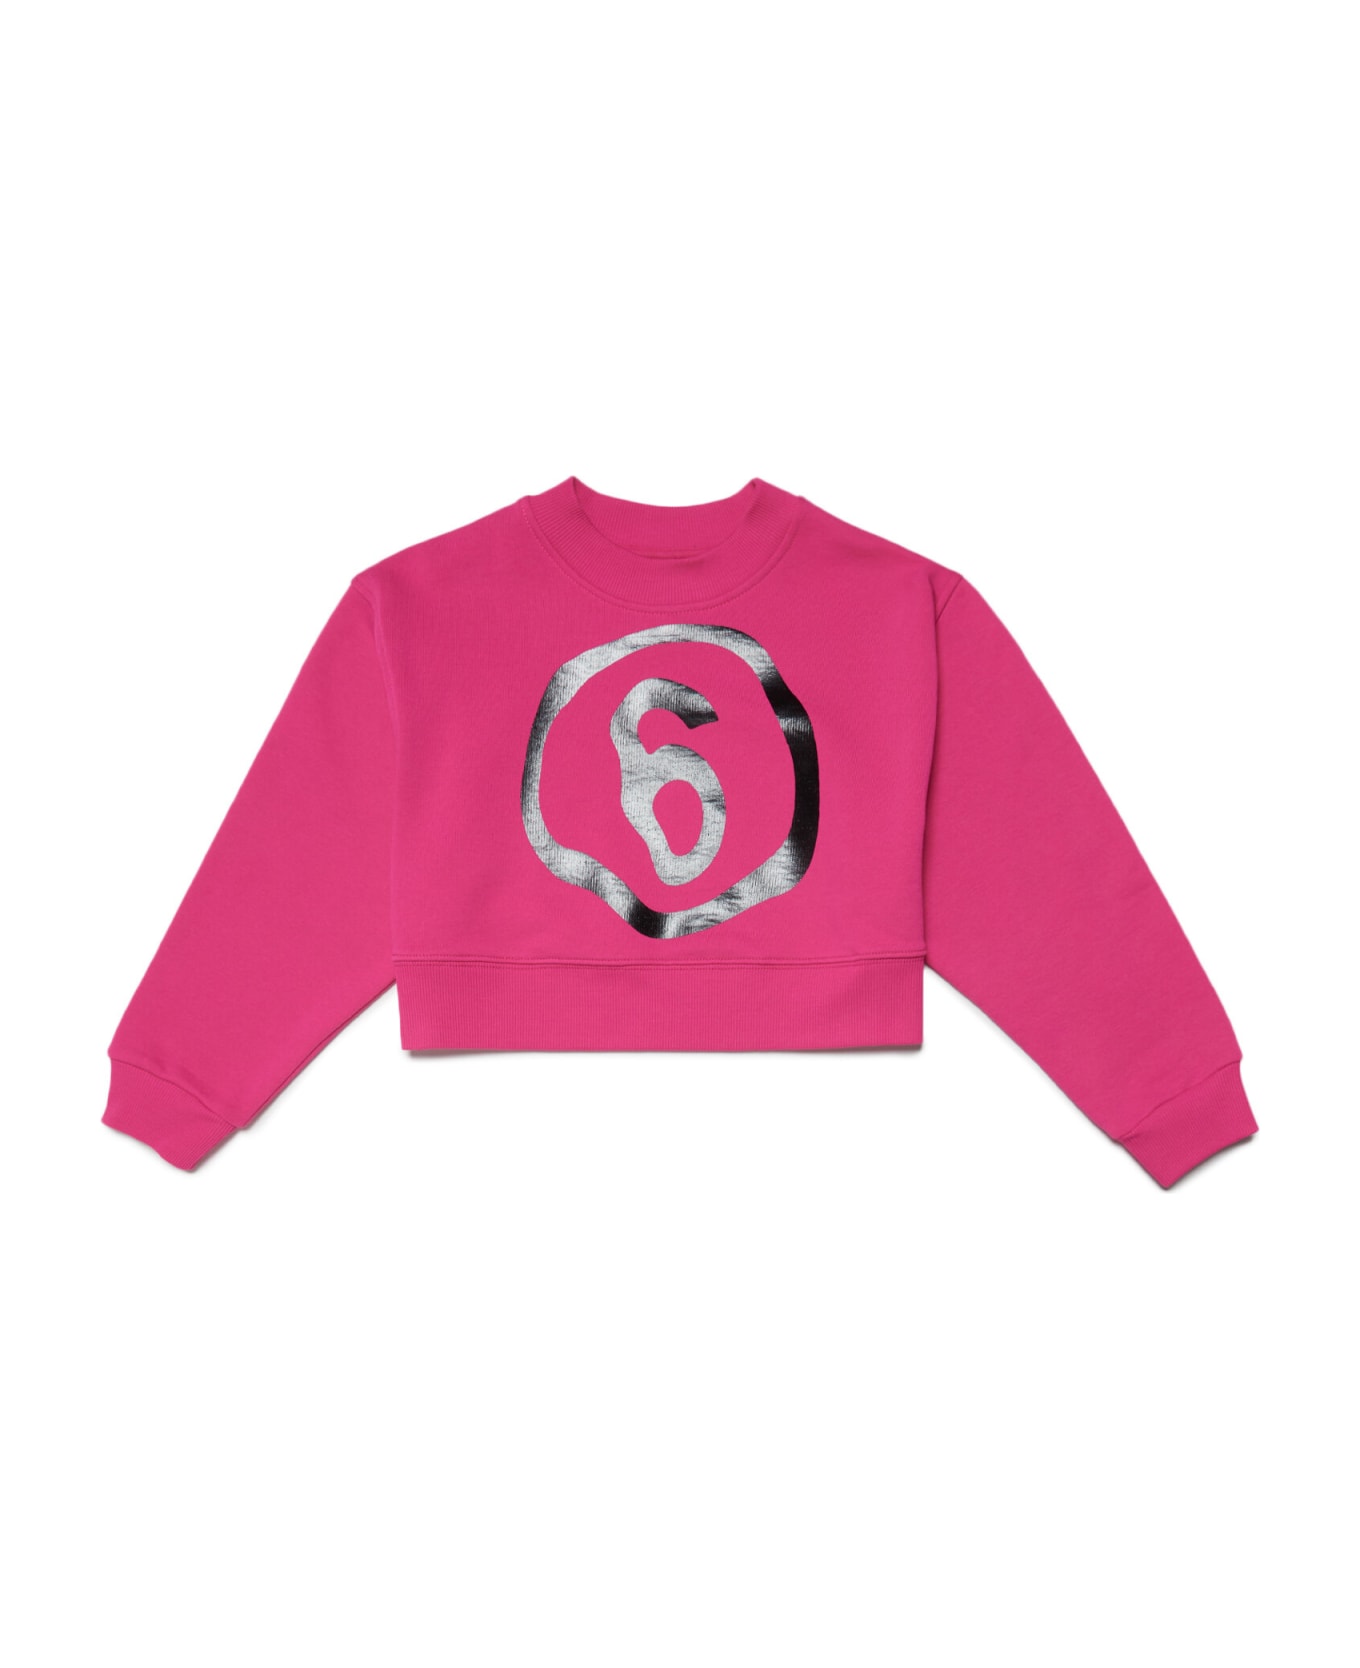 MM6 Maison Margiela Mm6s53u Sweat-shirt Maison Margiela Pink Cropped Crew-neck Cotton Sweatshirt With Fluid Effect Logo - Fucsia